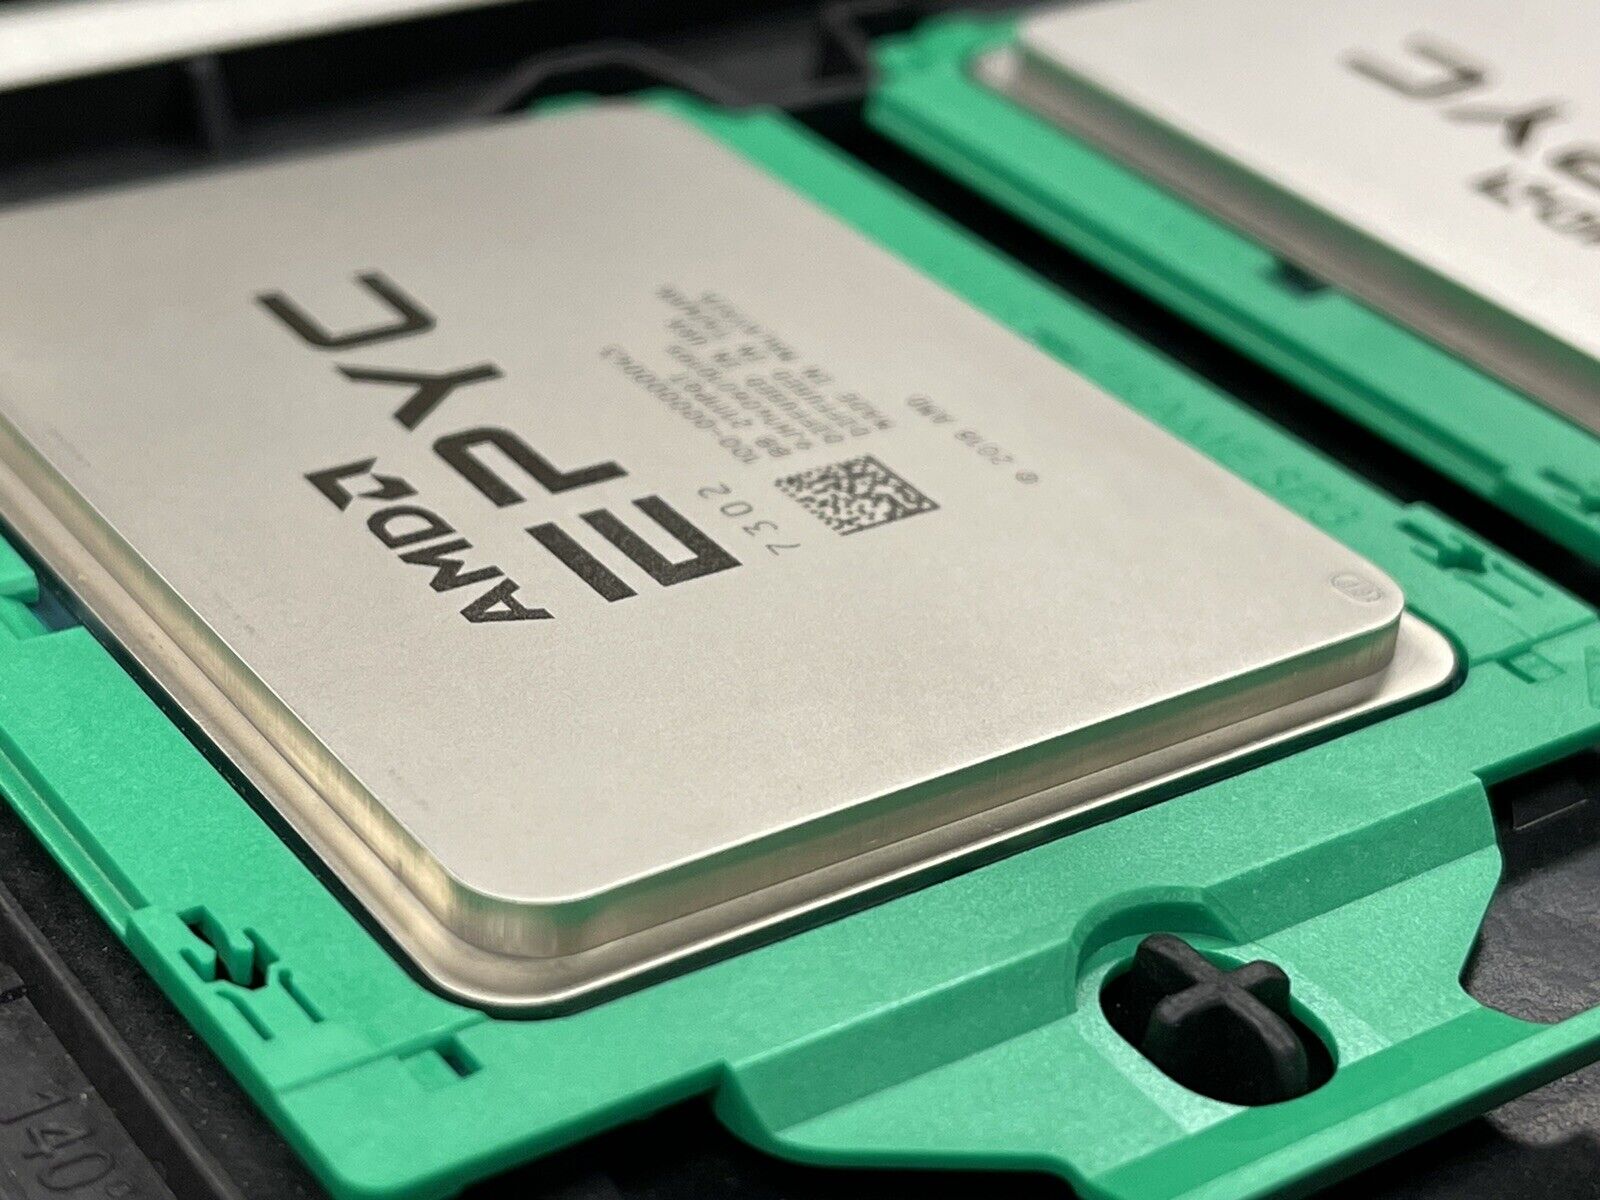 AMD EPYC 7302 Rome 16-Core 3GHz 32MB SP3 Socket 155W Processor CPU